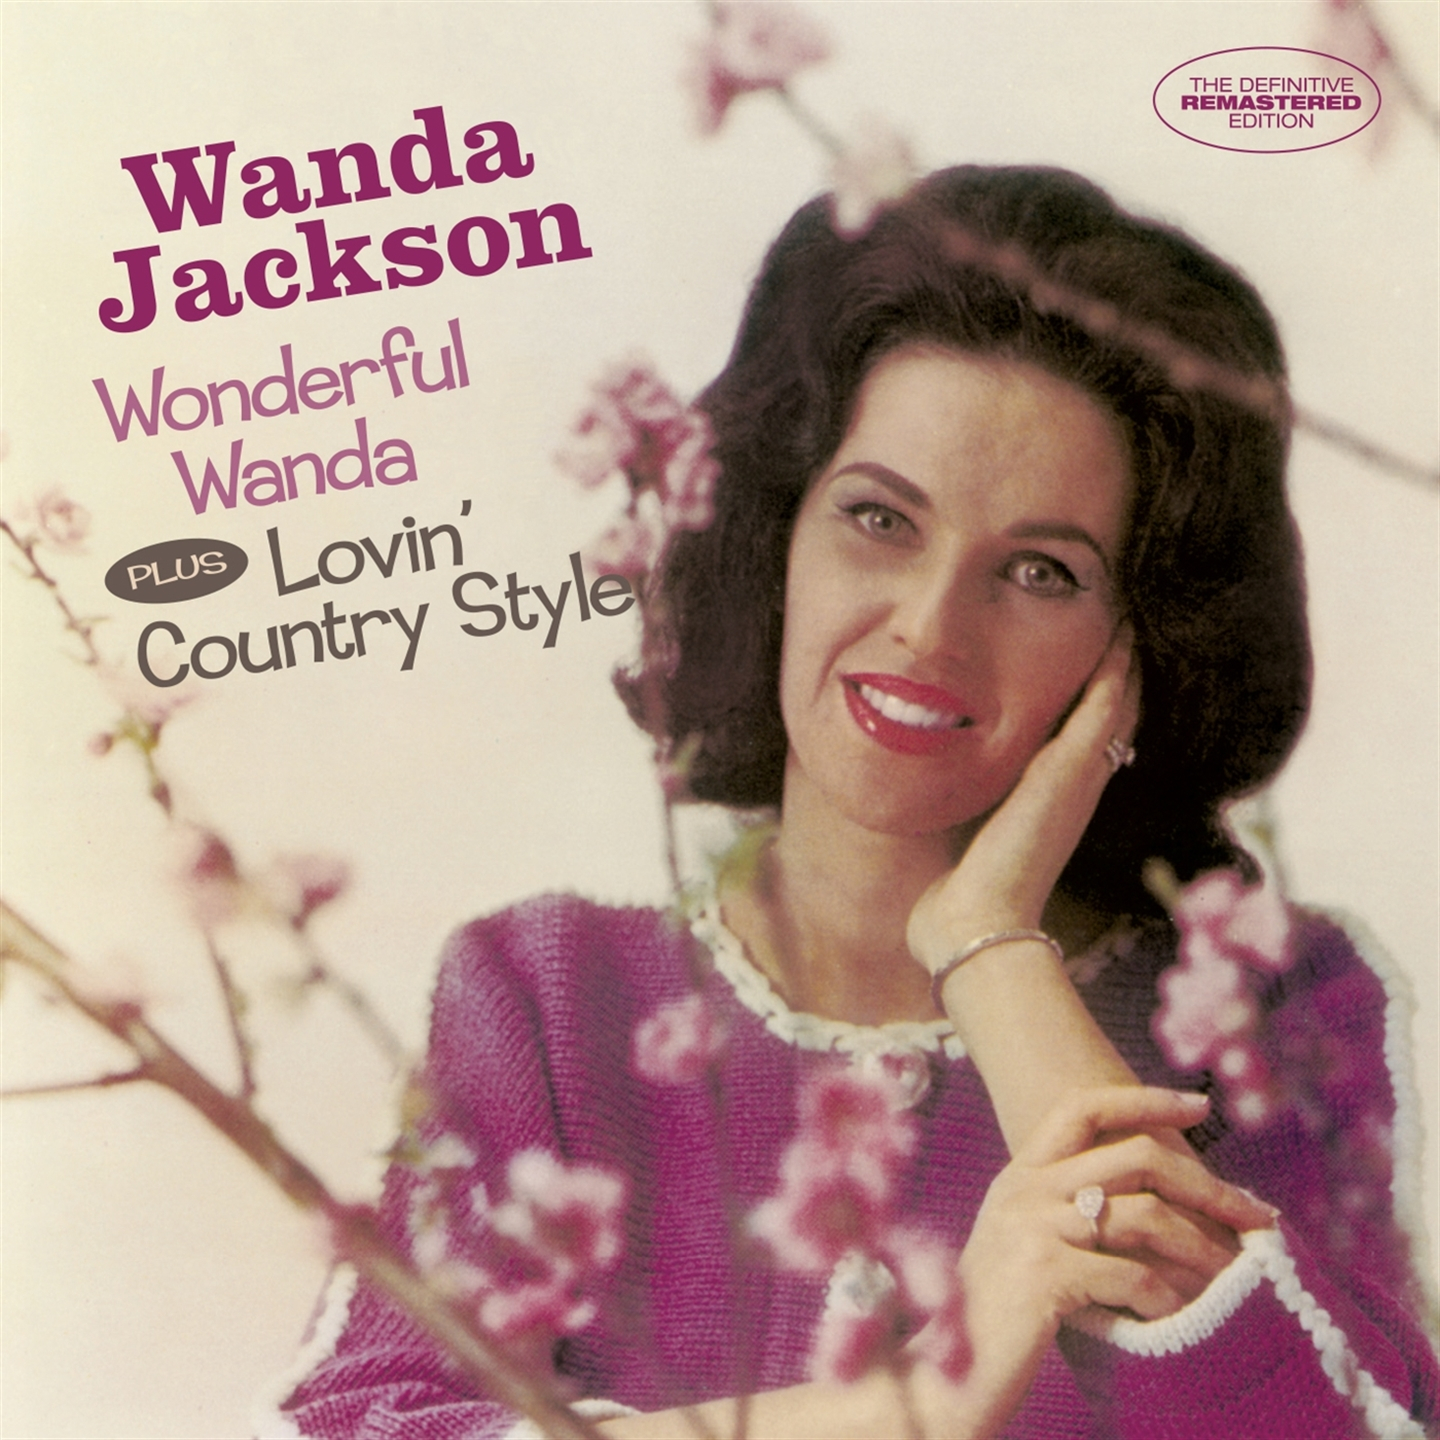 Wanda Jackson - Wonderful Wanda (+ Lovin' Country Style) - Picture 1 of 1